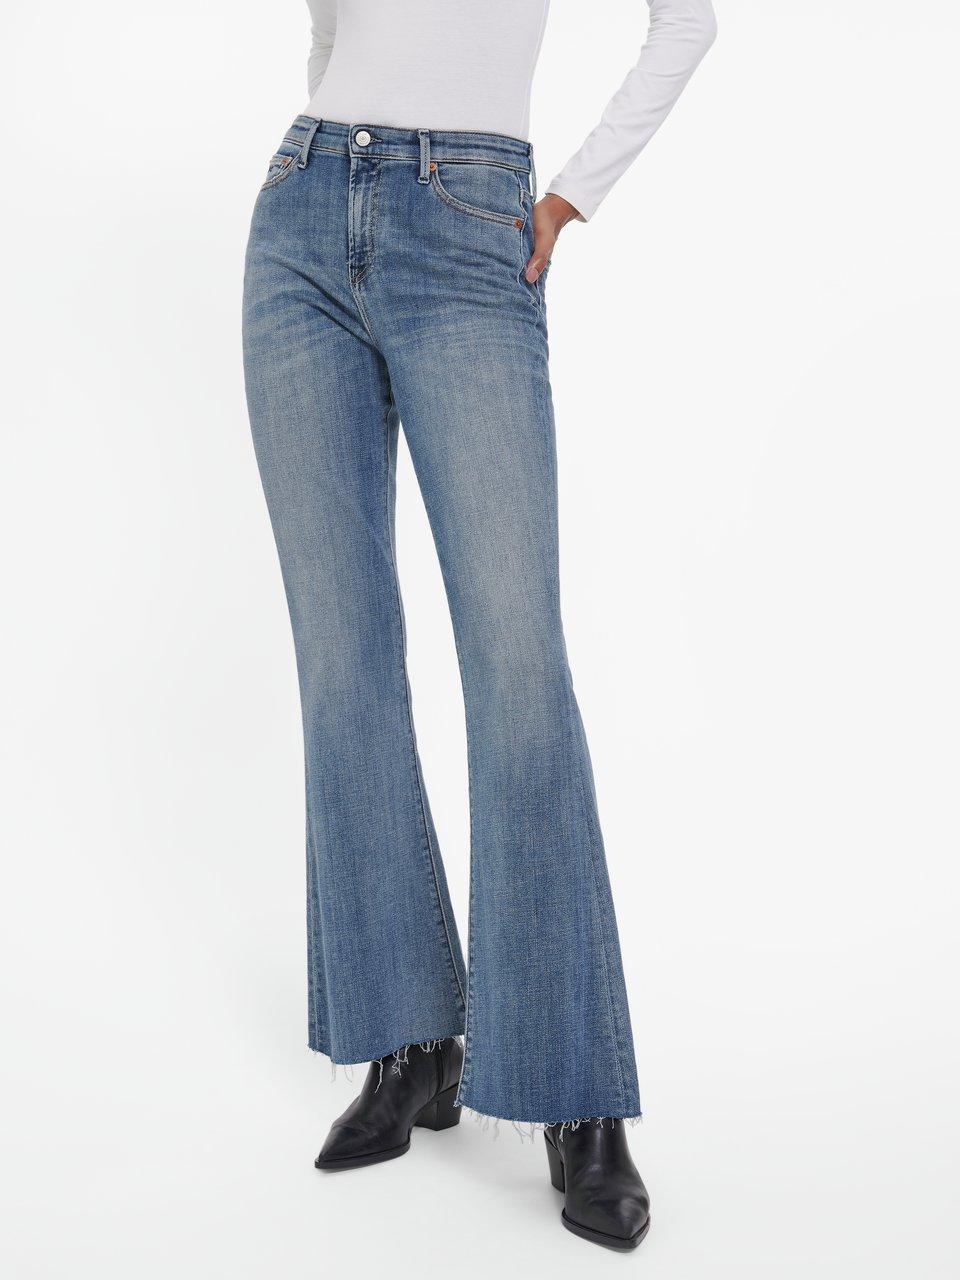 Denham - Le jean Jane longueur 30 inch